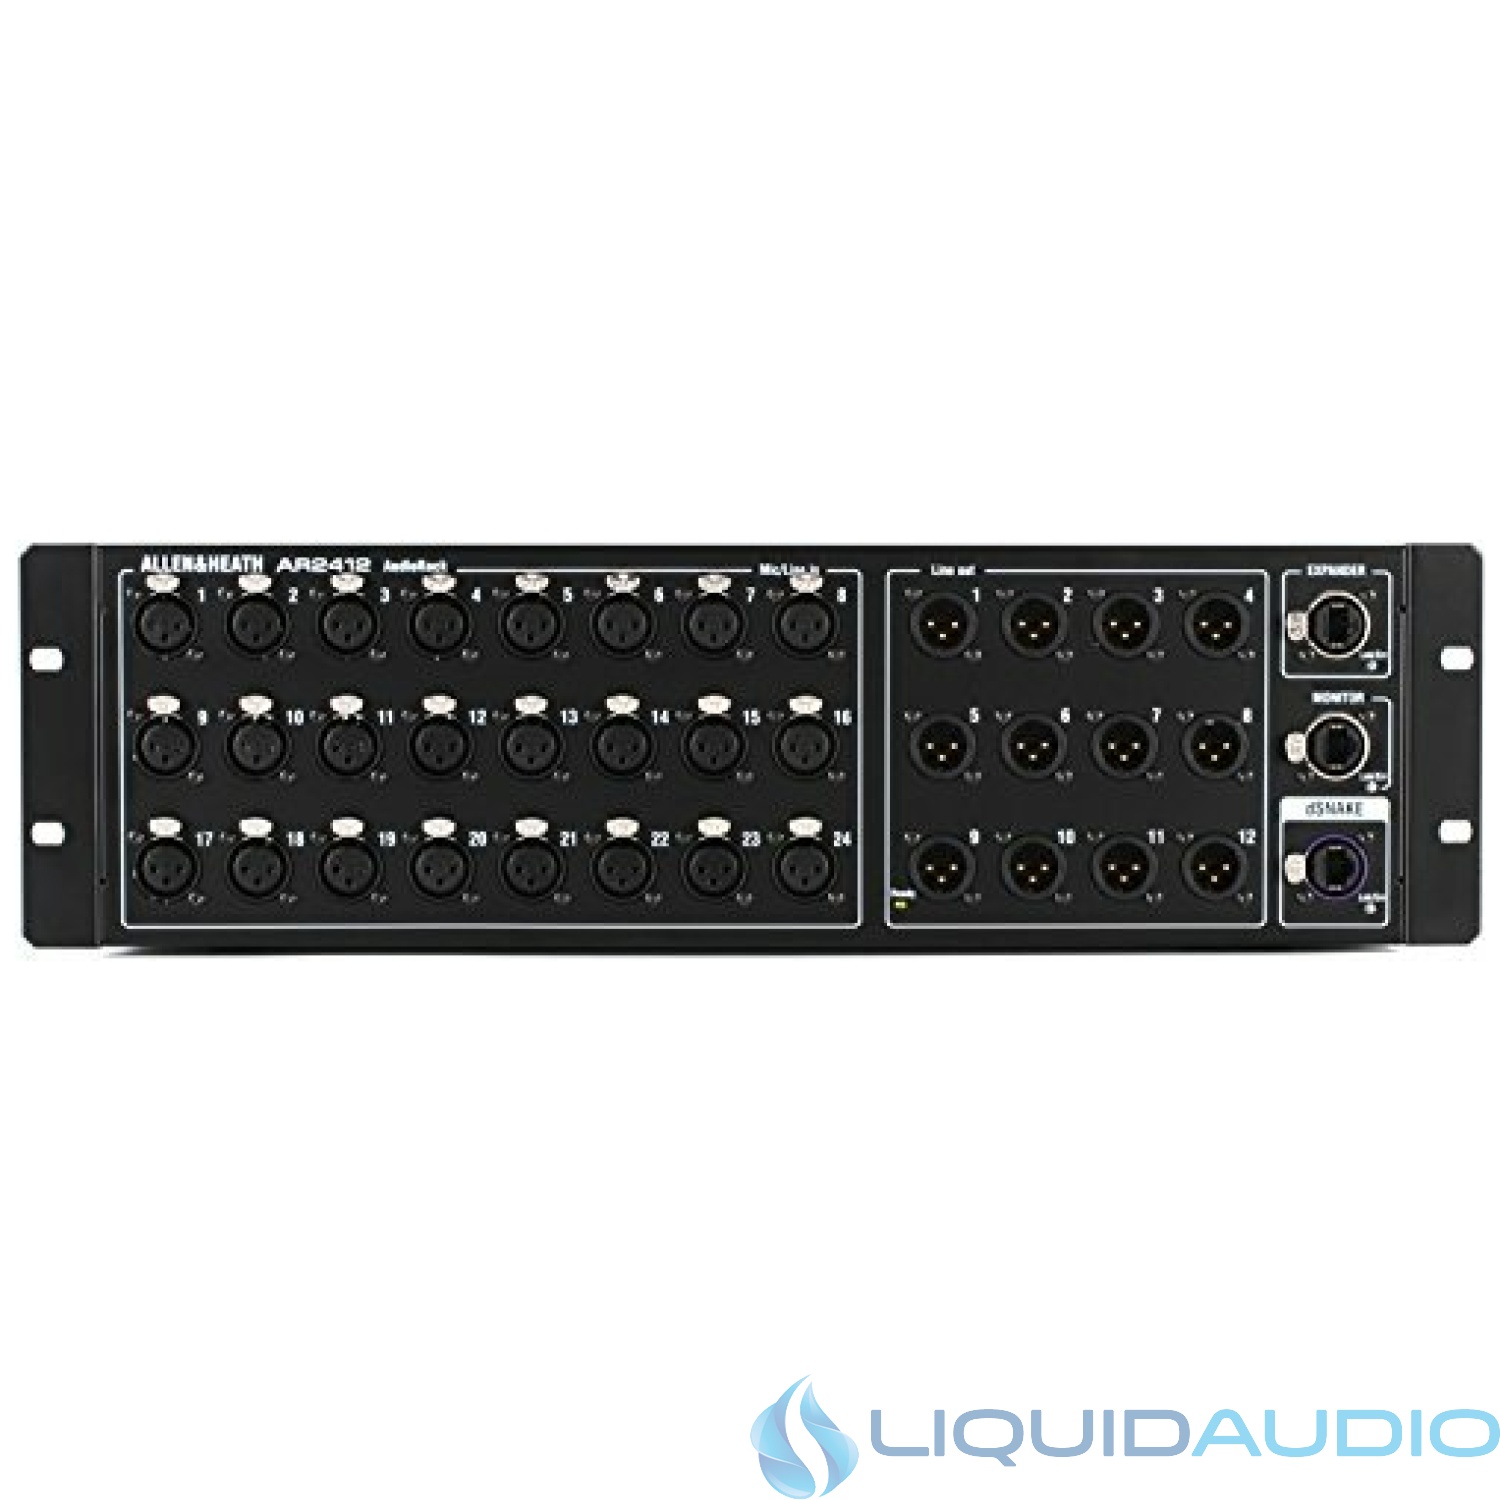 Allen & Heath AR2412 Remote Audio Rack For GLD Digital Mixing System, Black